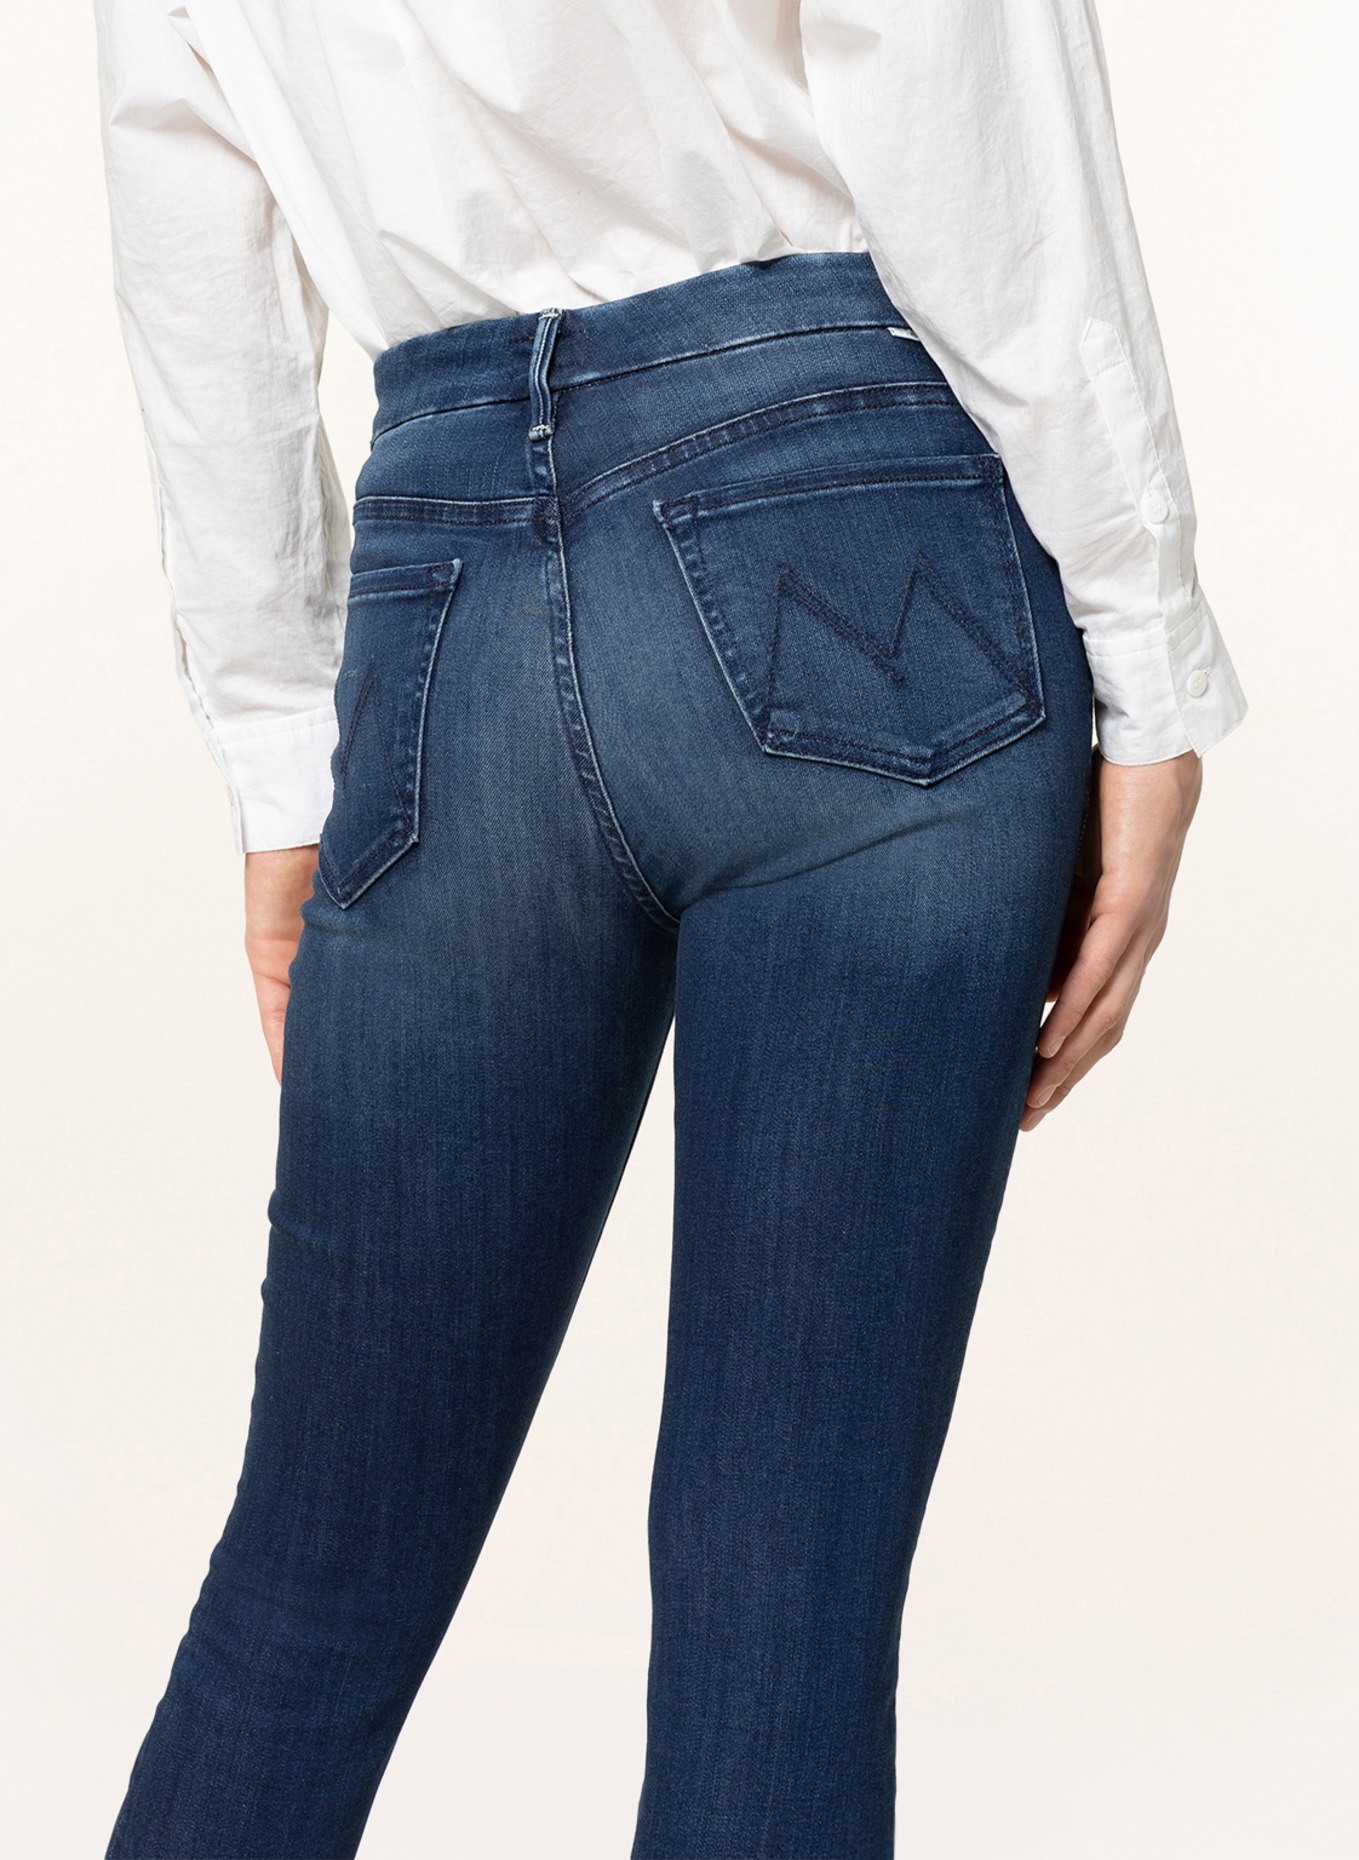 SkinnyJeans® Colored Denim - Classy Mommy